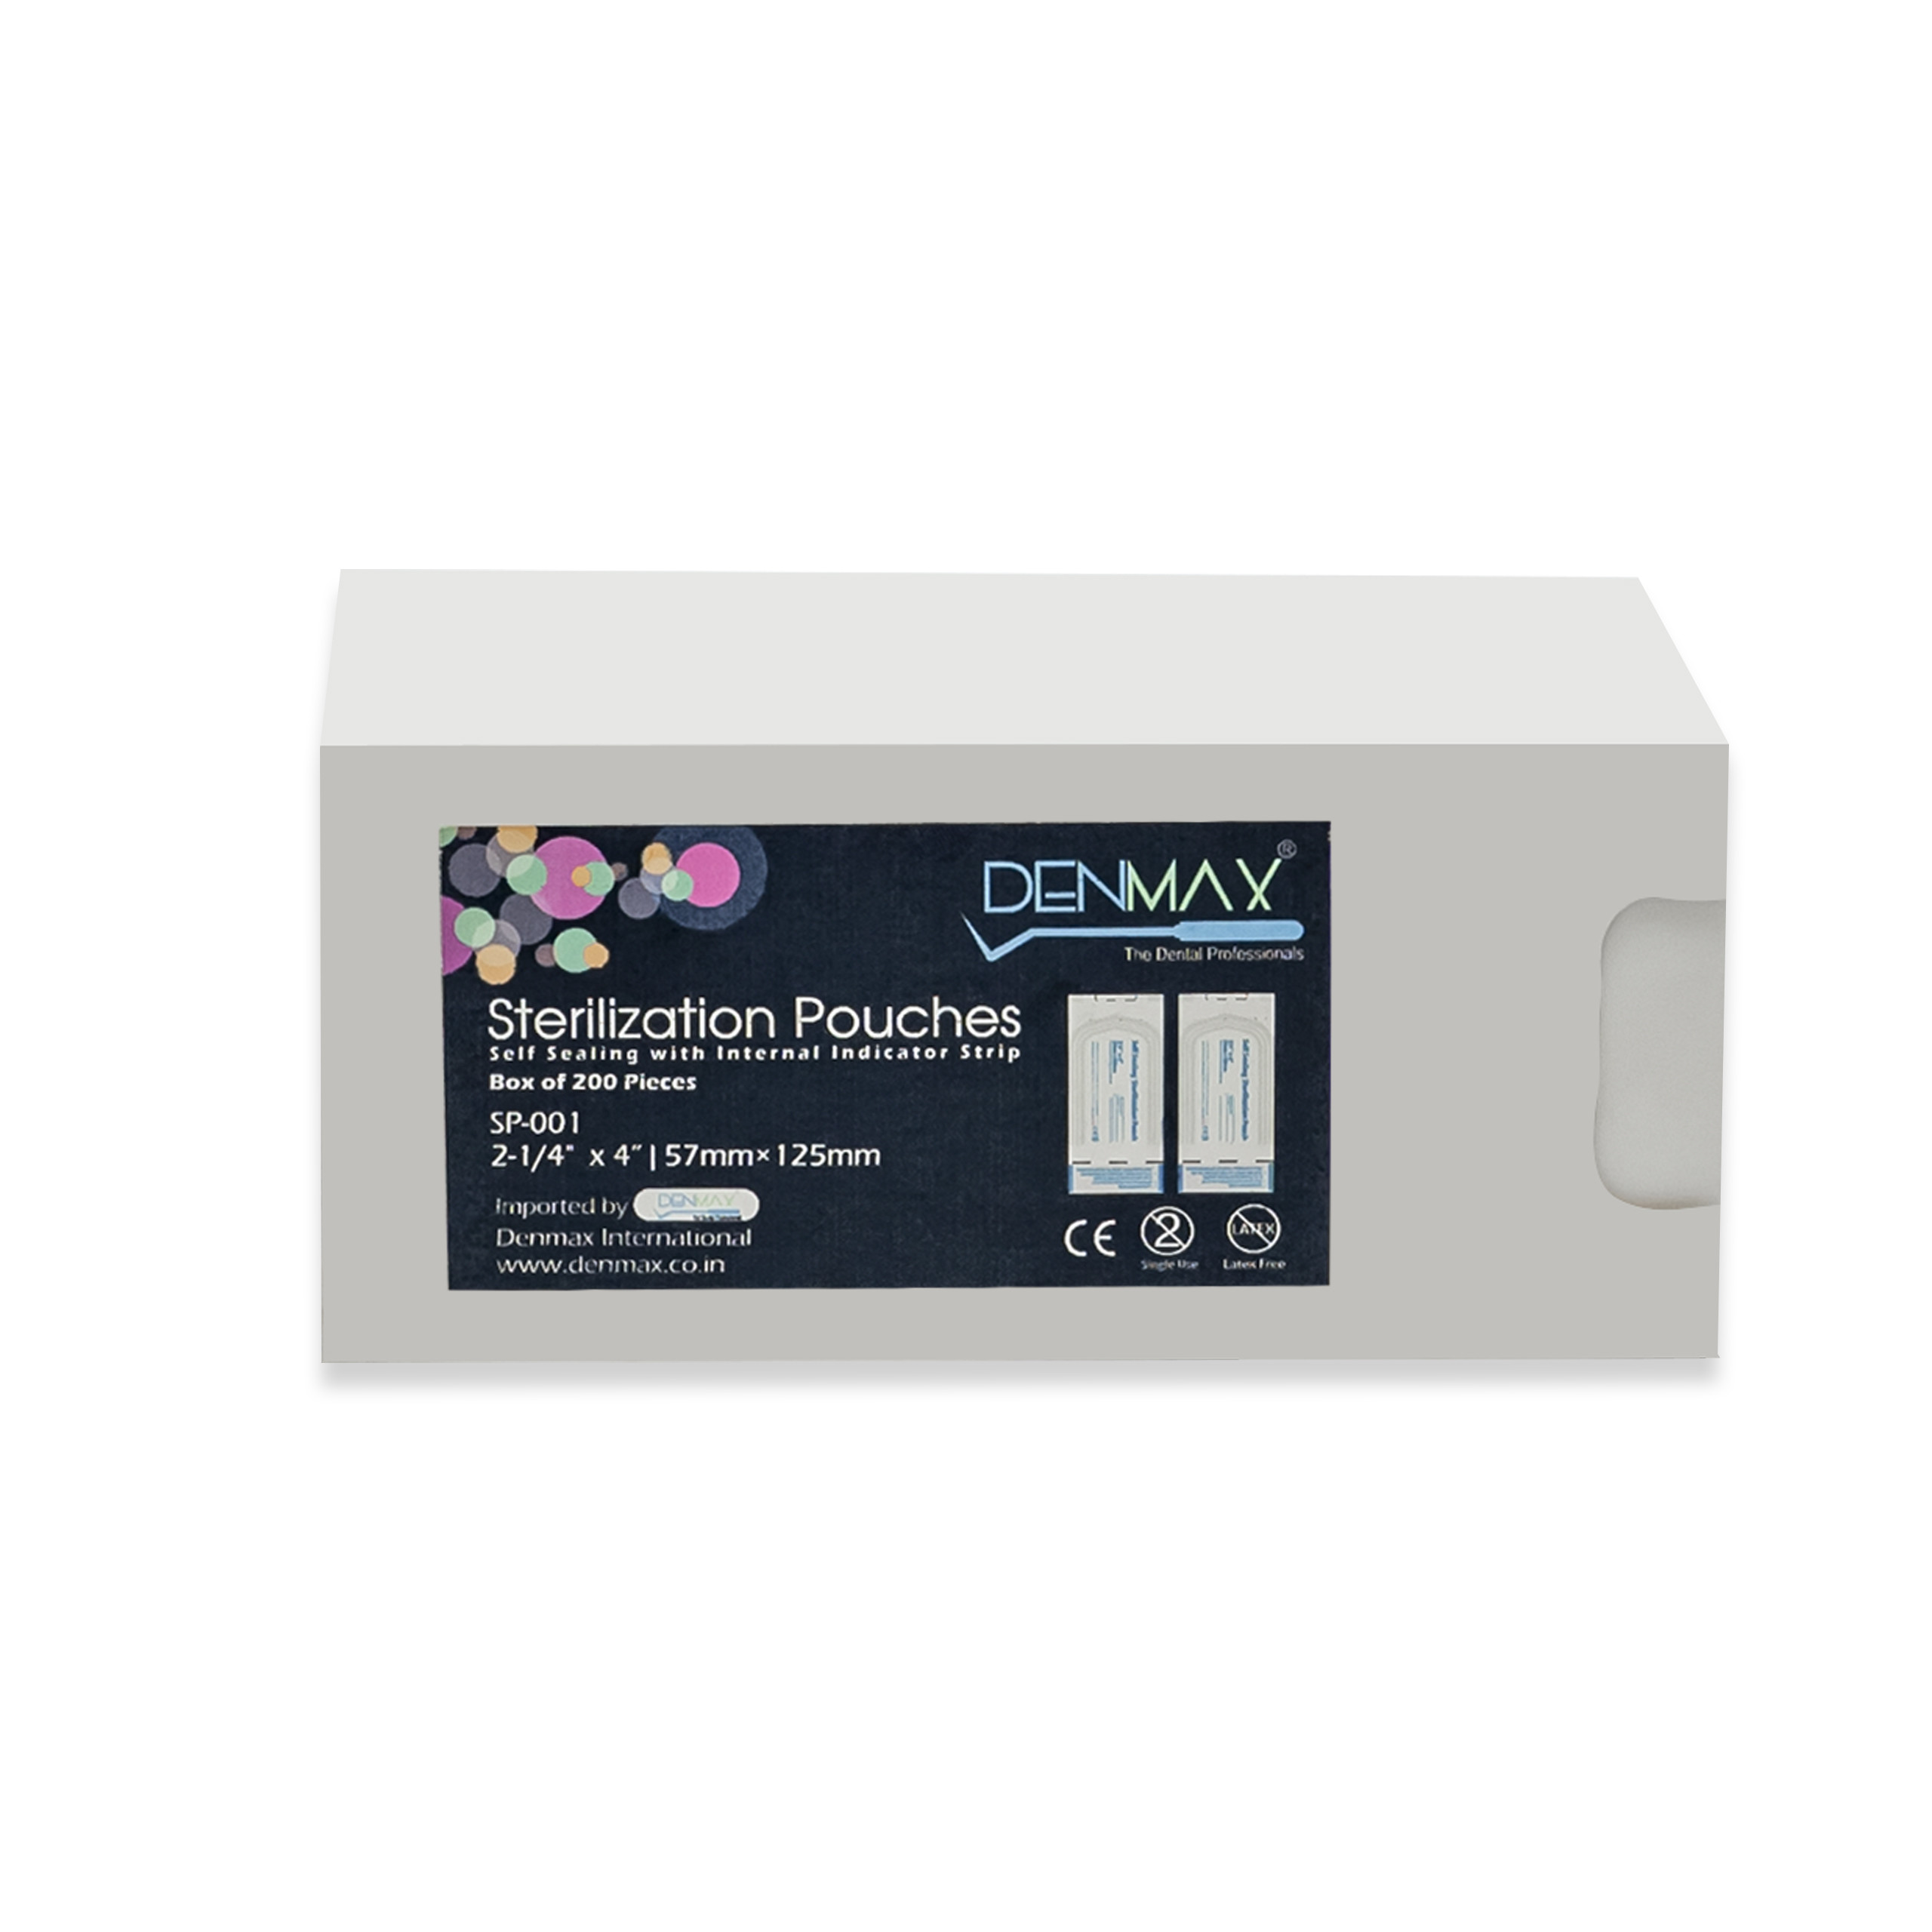 Denmax Self Sealing Sterilization Pouches (57mm X 125mm)